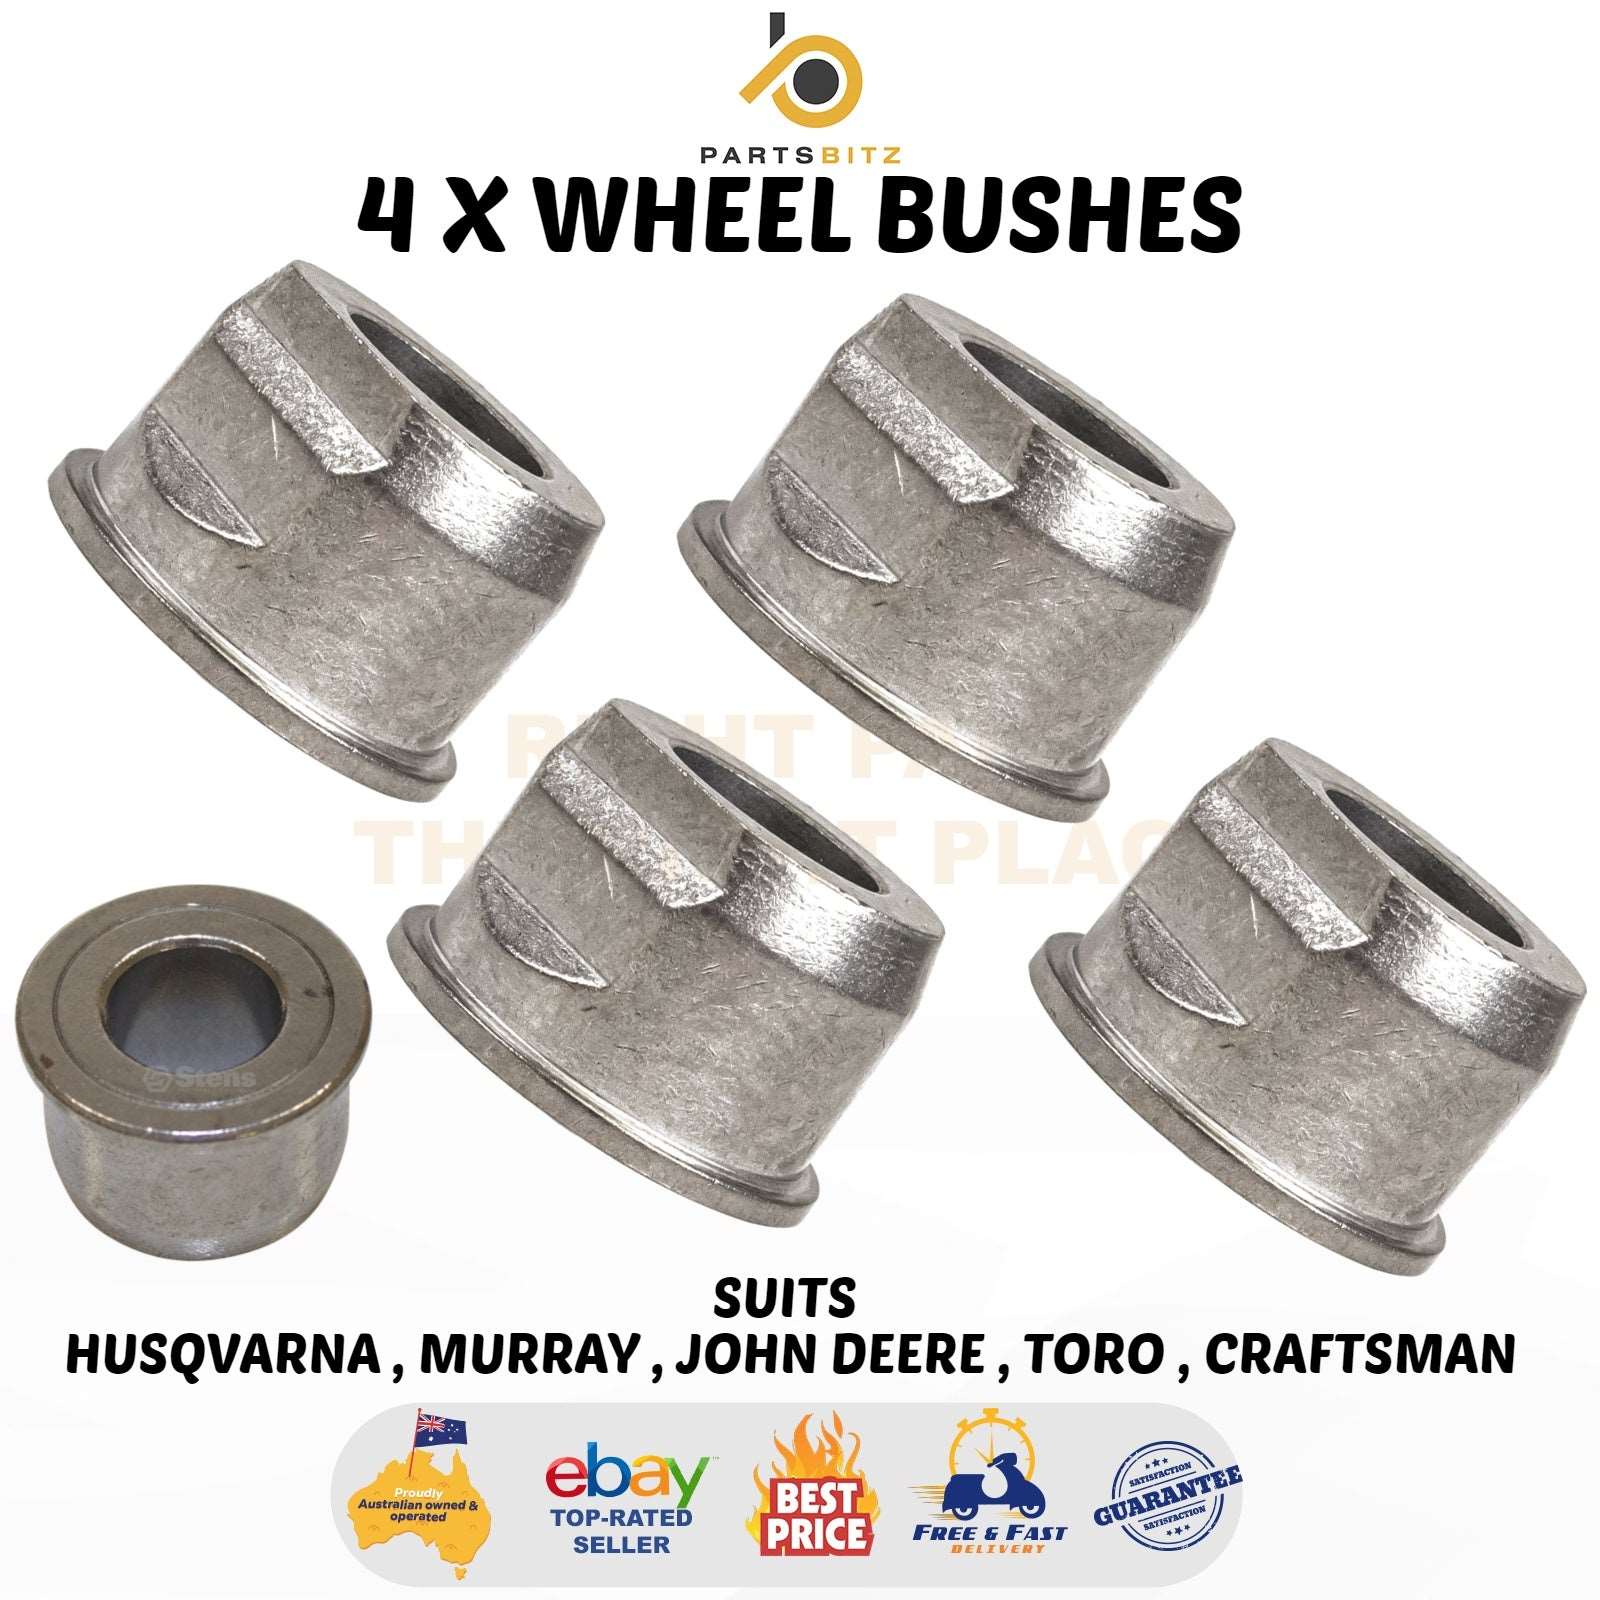 4 X Wheel Bushes for Husqvarna Ride on Mowers 532009040 532124959 124959 9040H